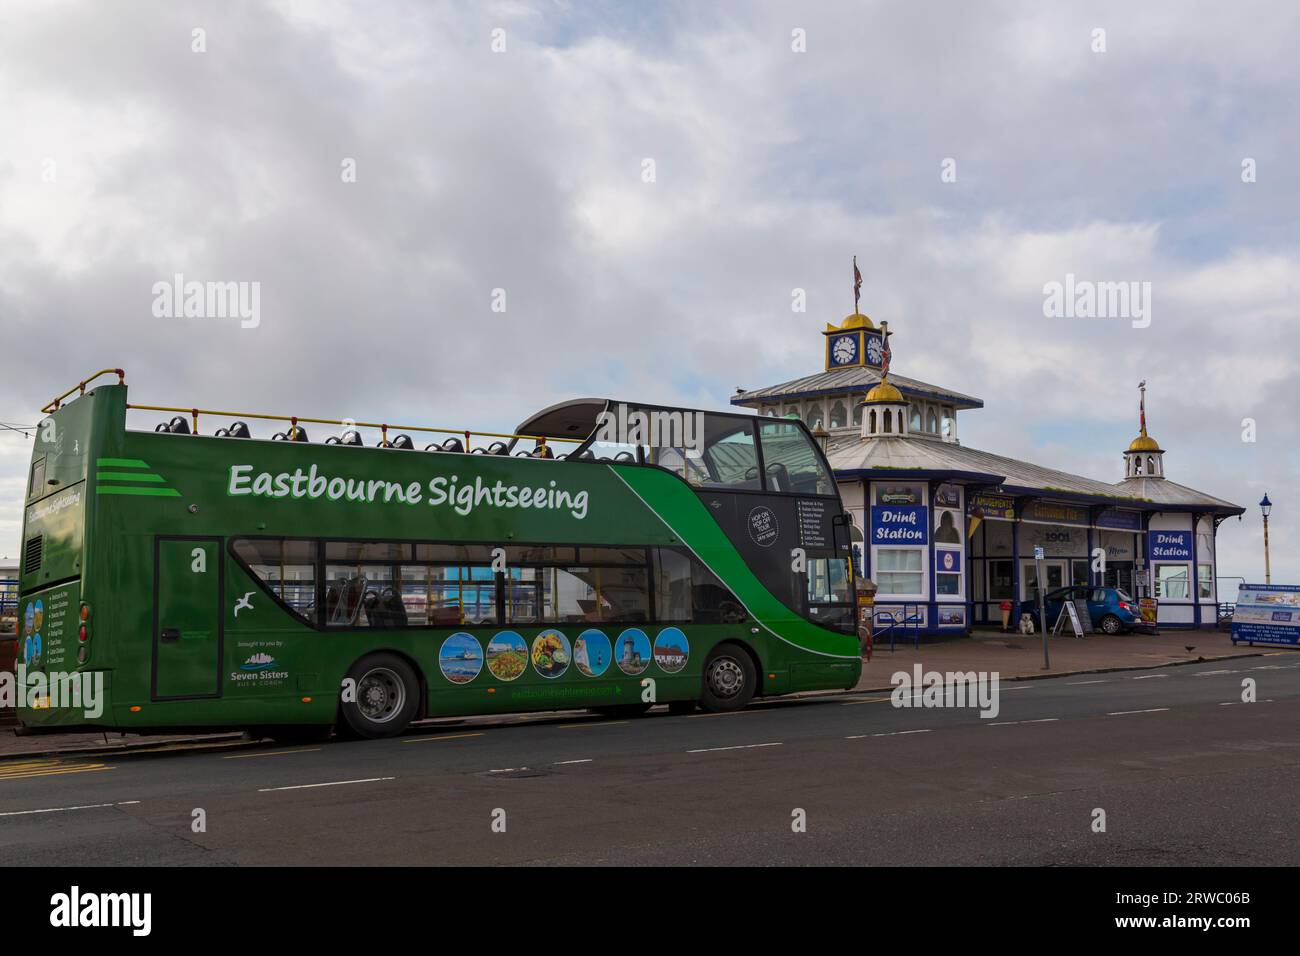 Eastbourne Sightseeing Bus hop on hop off bus at Eastbourne, East Sussex, UK in September Stock Photo